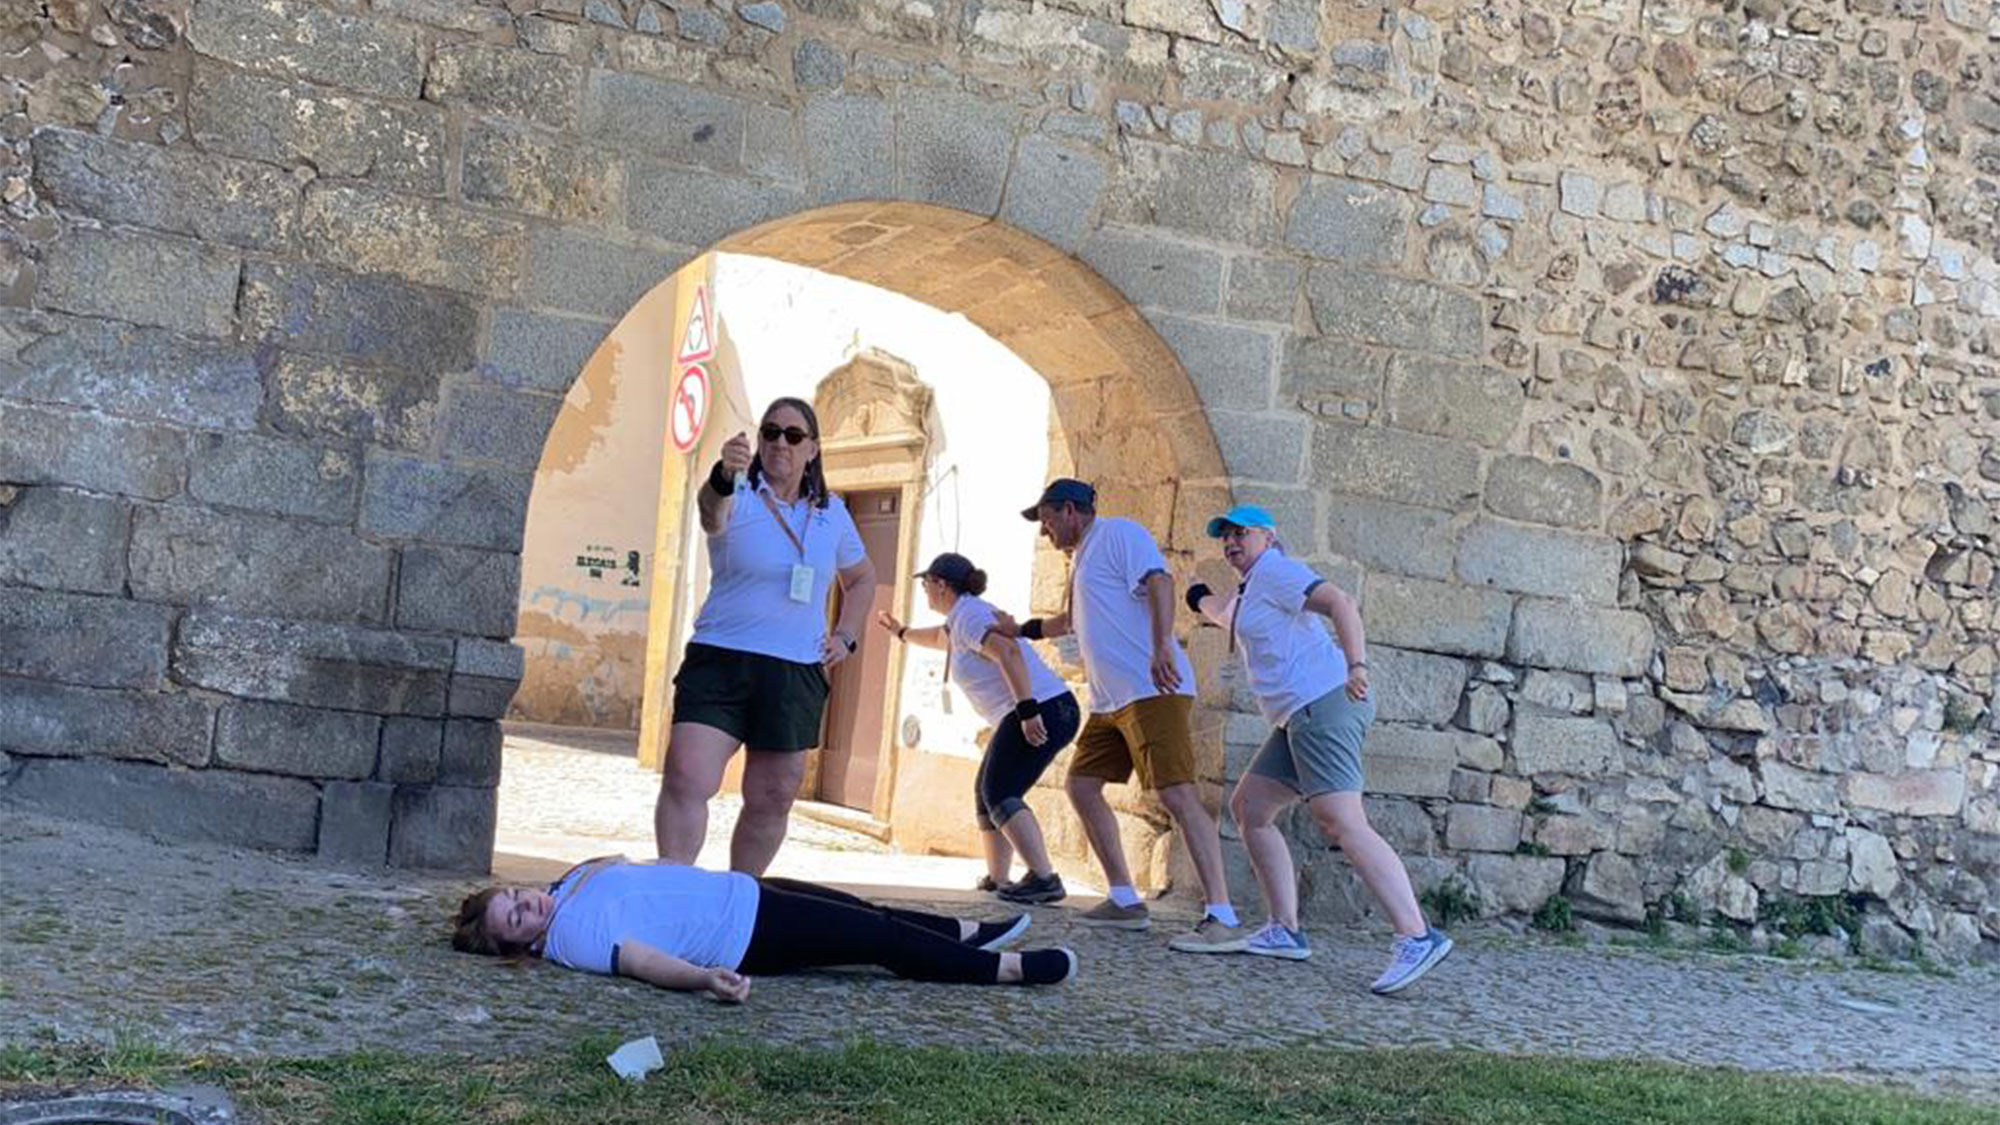 Robert Silk's race team reenacting Geraldo sem Pavor's conquest of Evora in the 12th century.